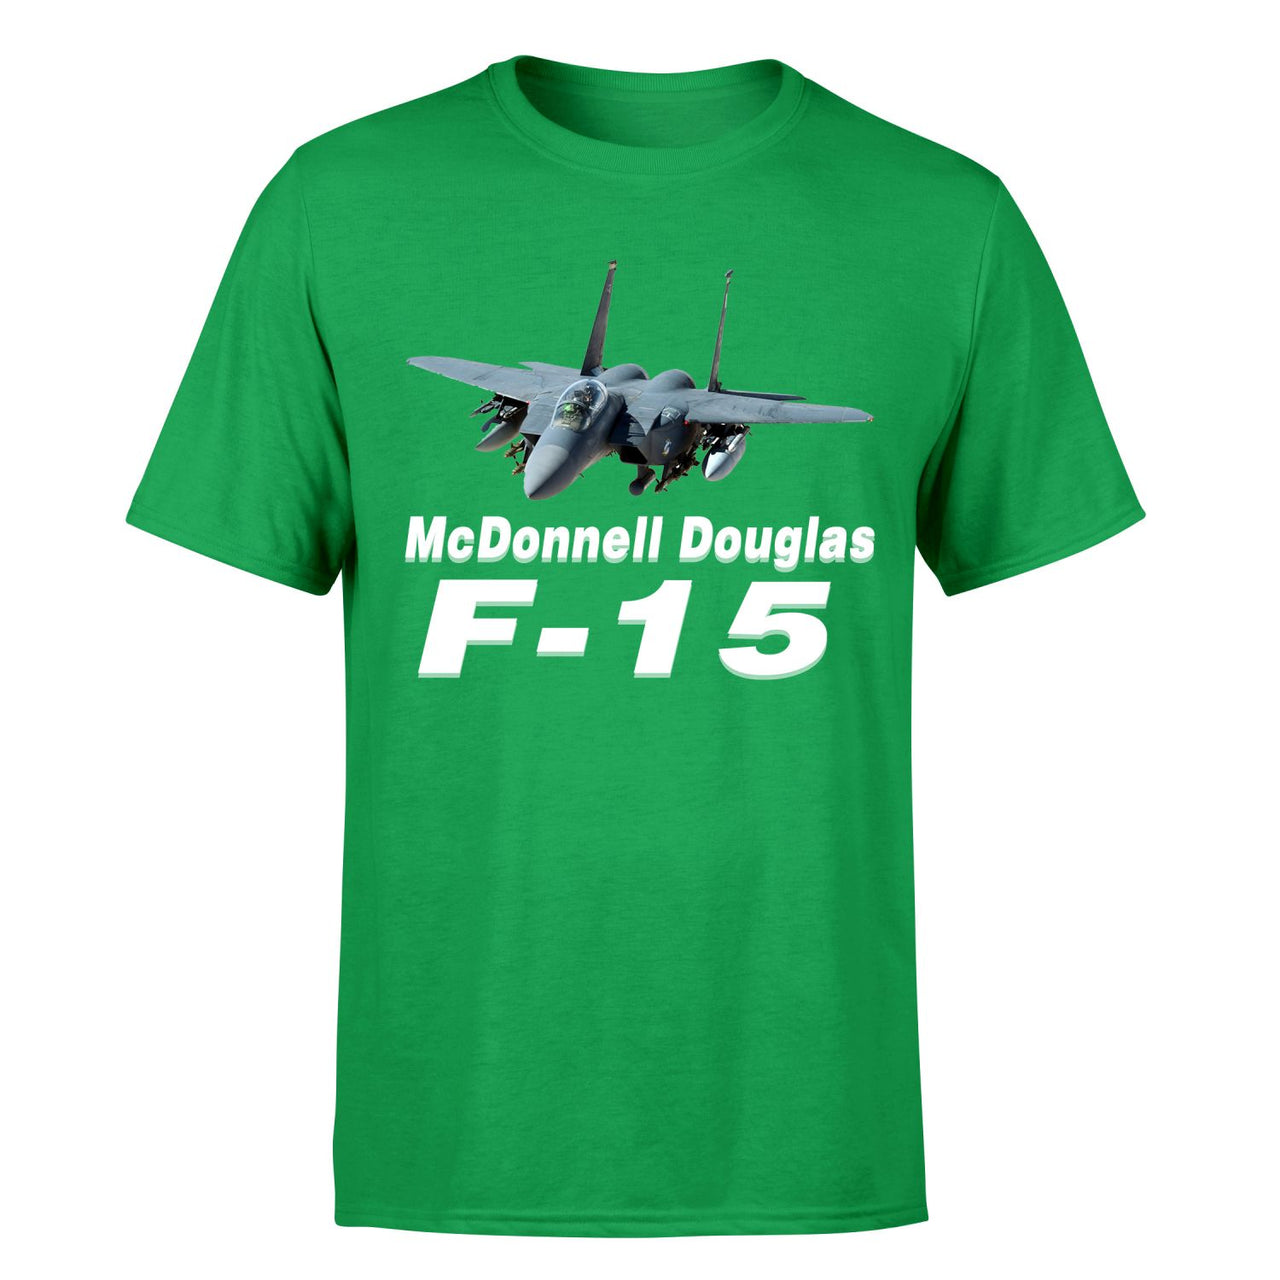 The McDonnell Douglas F15 Designed T-Shirts